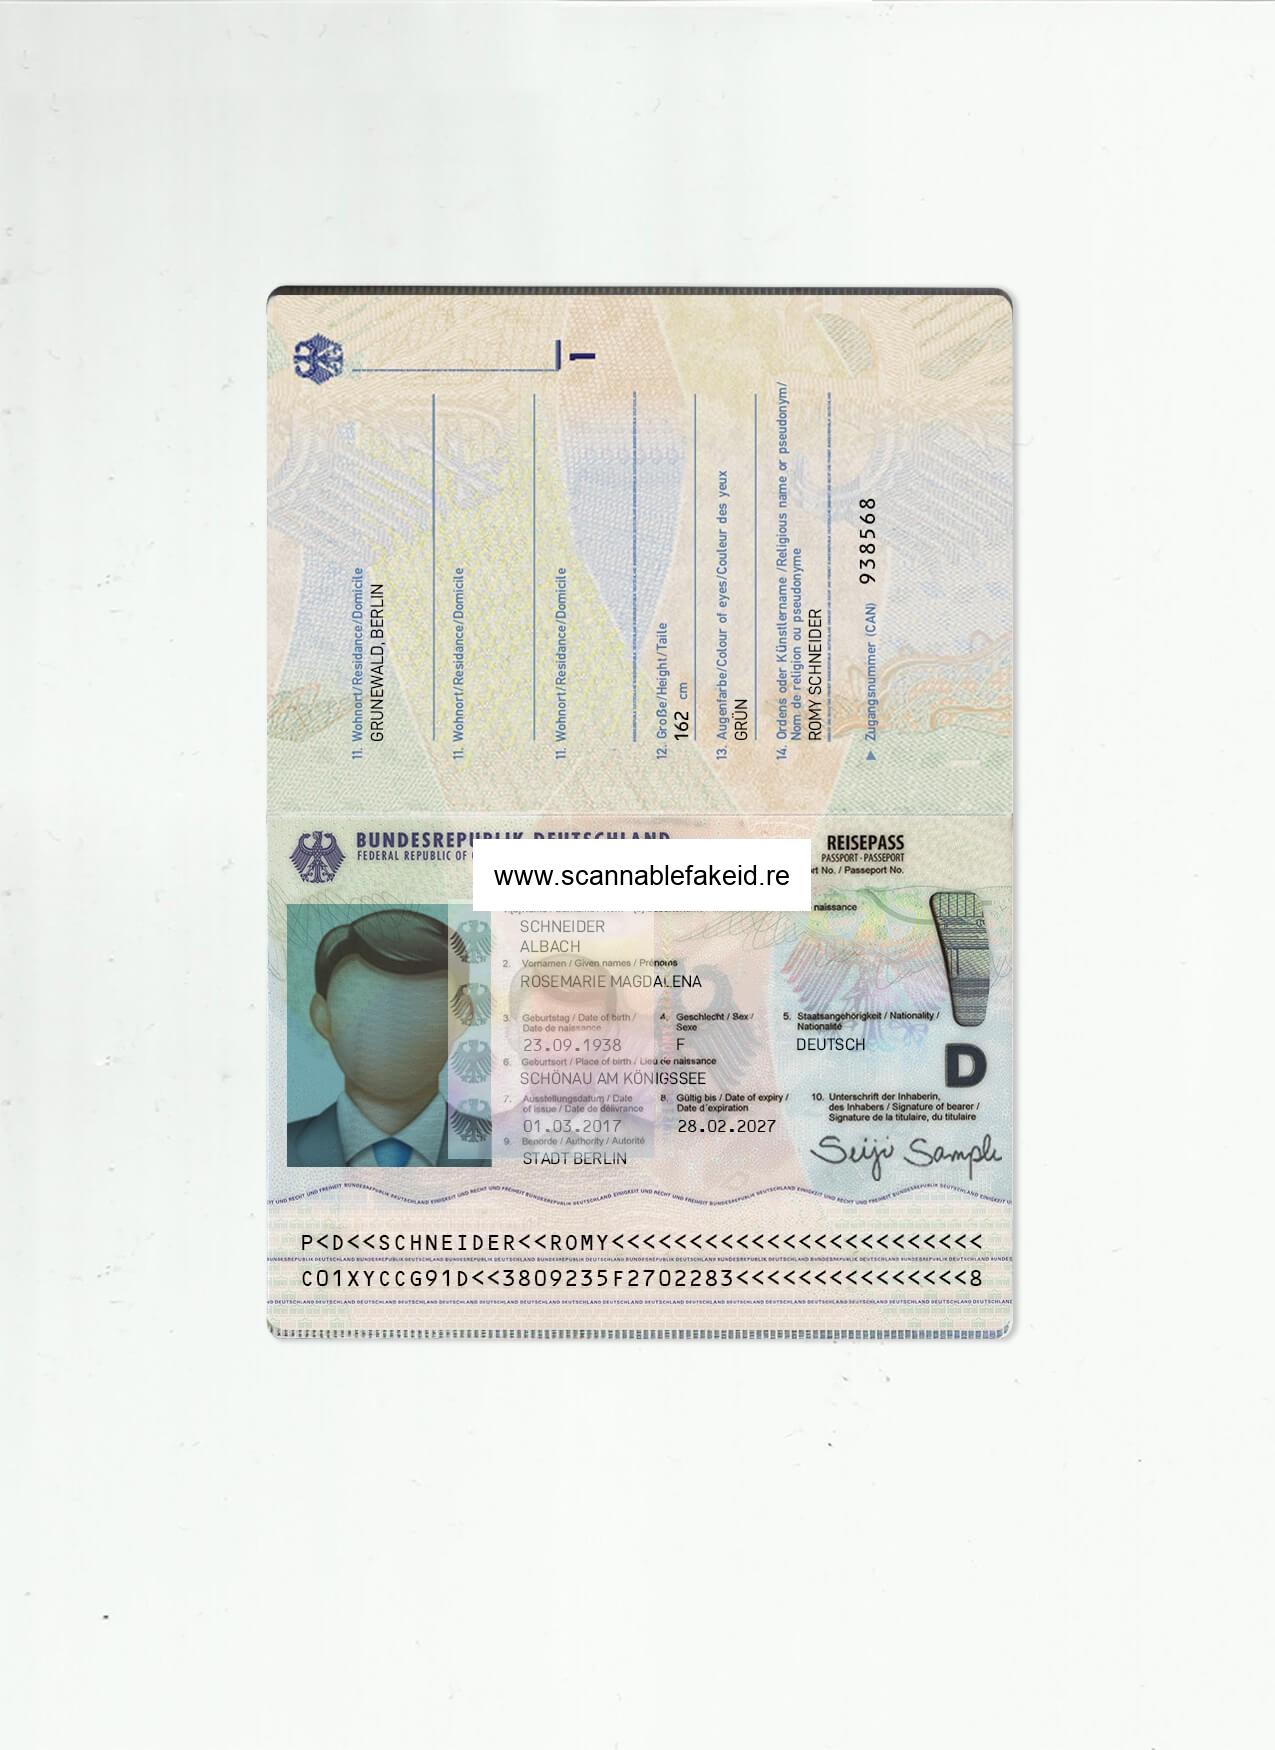 Germany Fake Passport V2 - Buy Scannable Fake ID Online - Fake Drivers ...